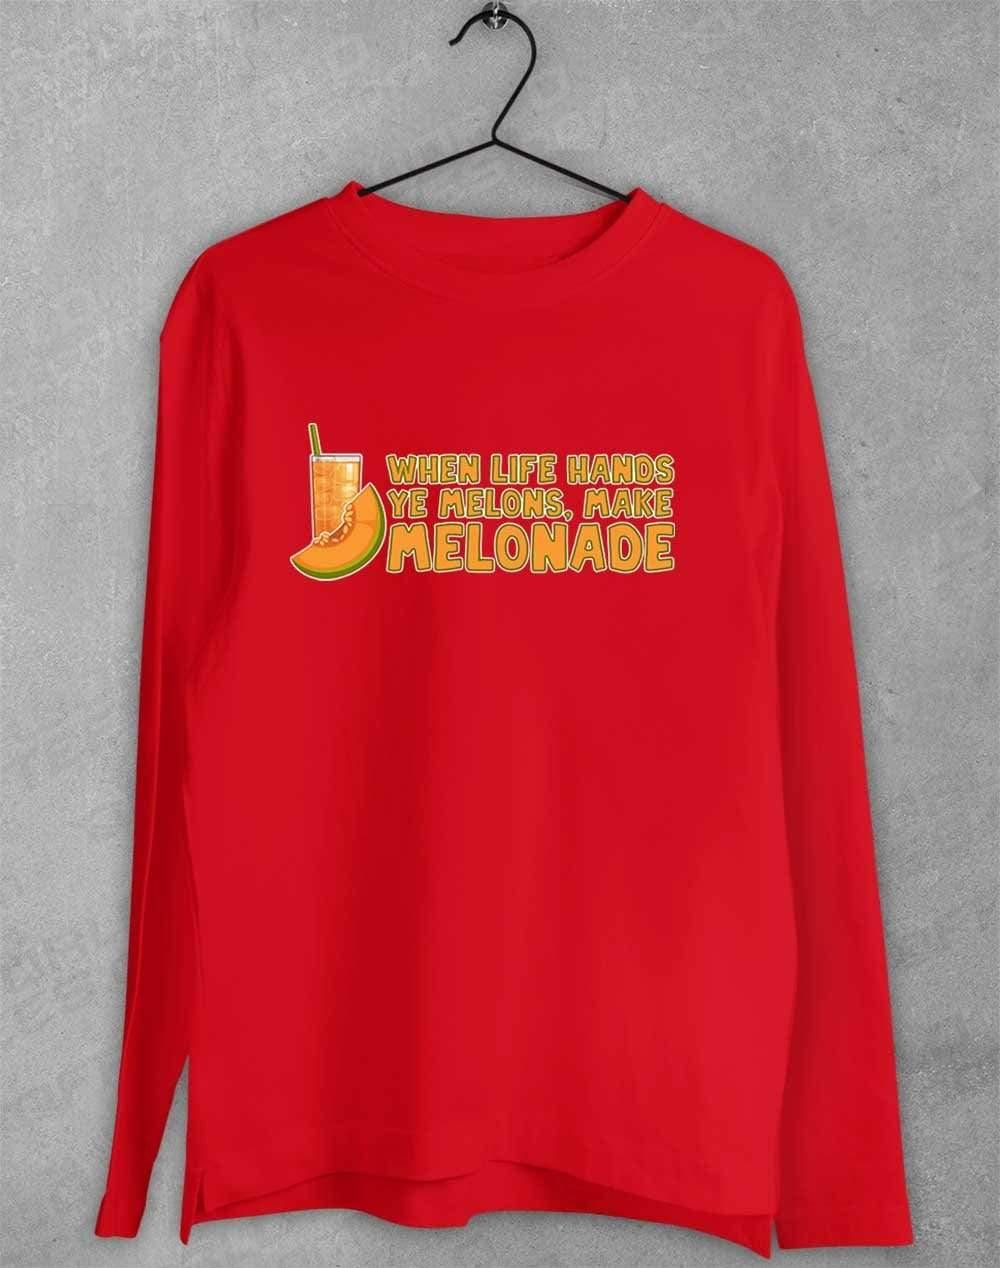 Make Melonade Long Sleeve T-Shirt S / Red  - Off World Tees